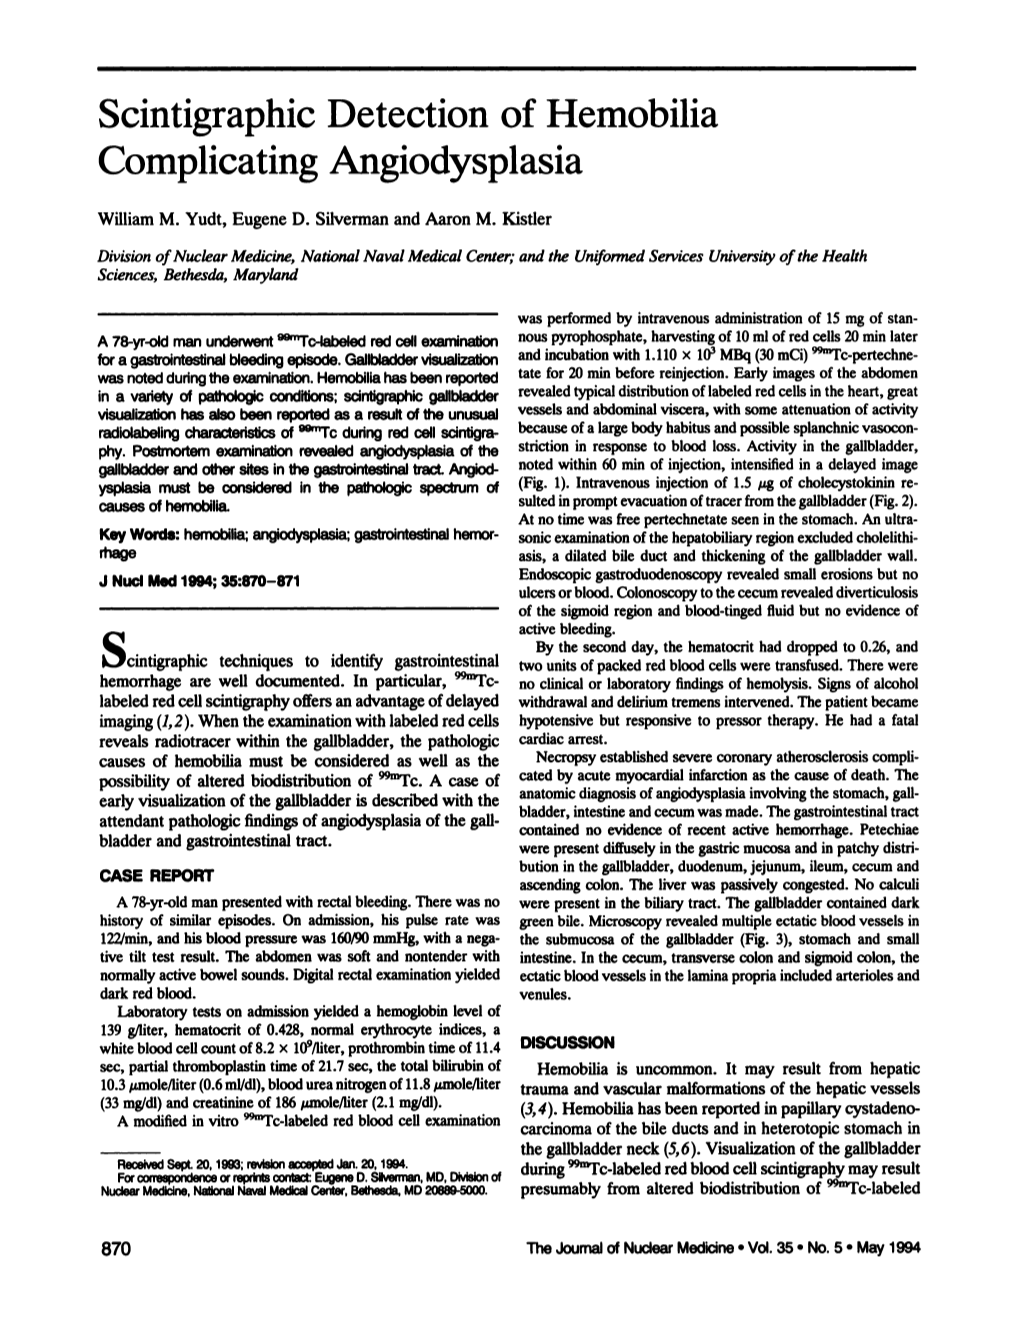 Scintigraphic Detection of Hemobilia Complicating Angiodysplasia